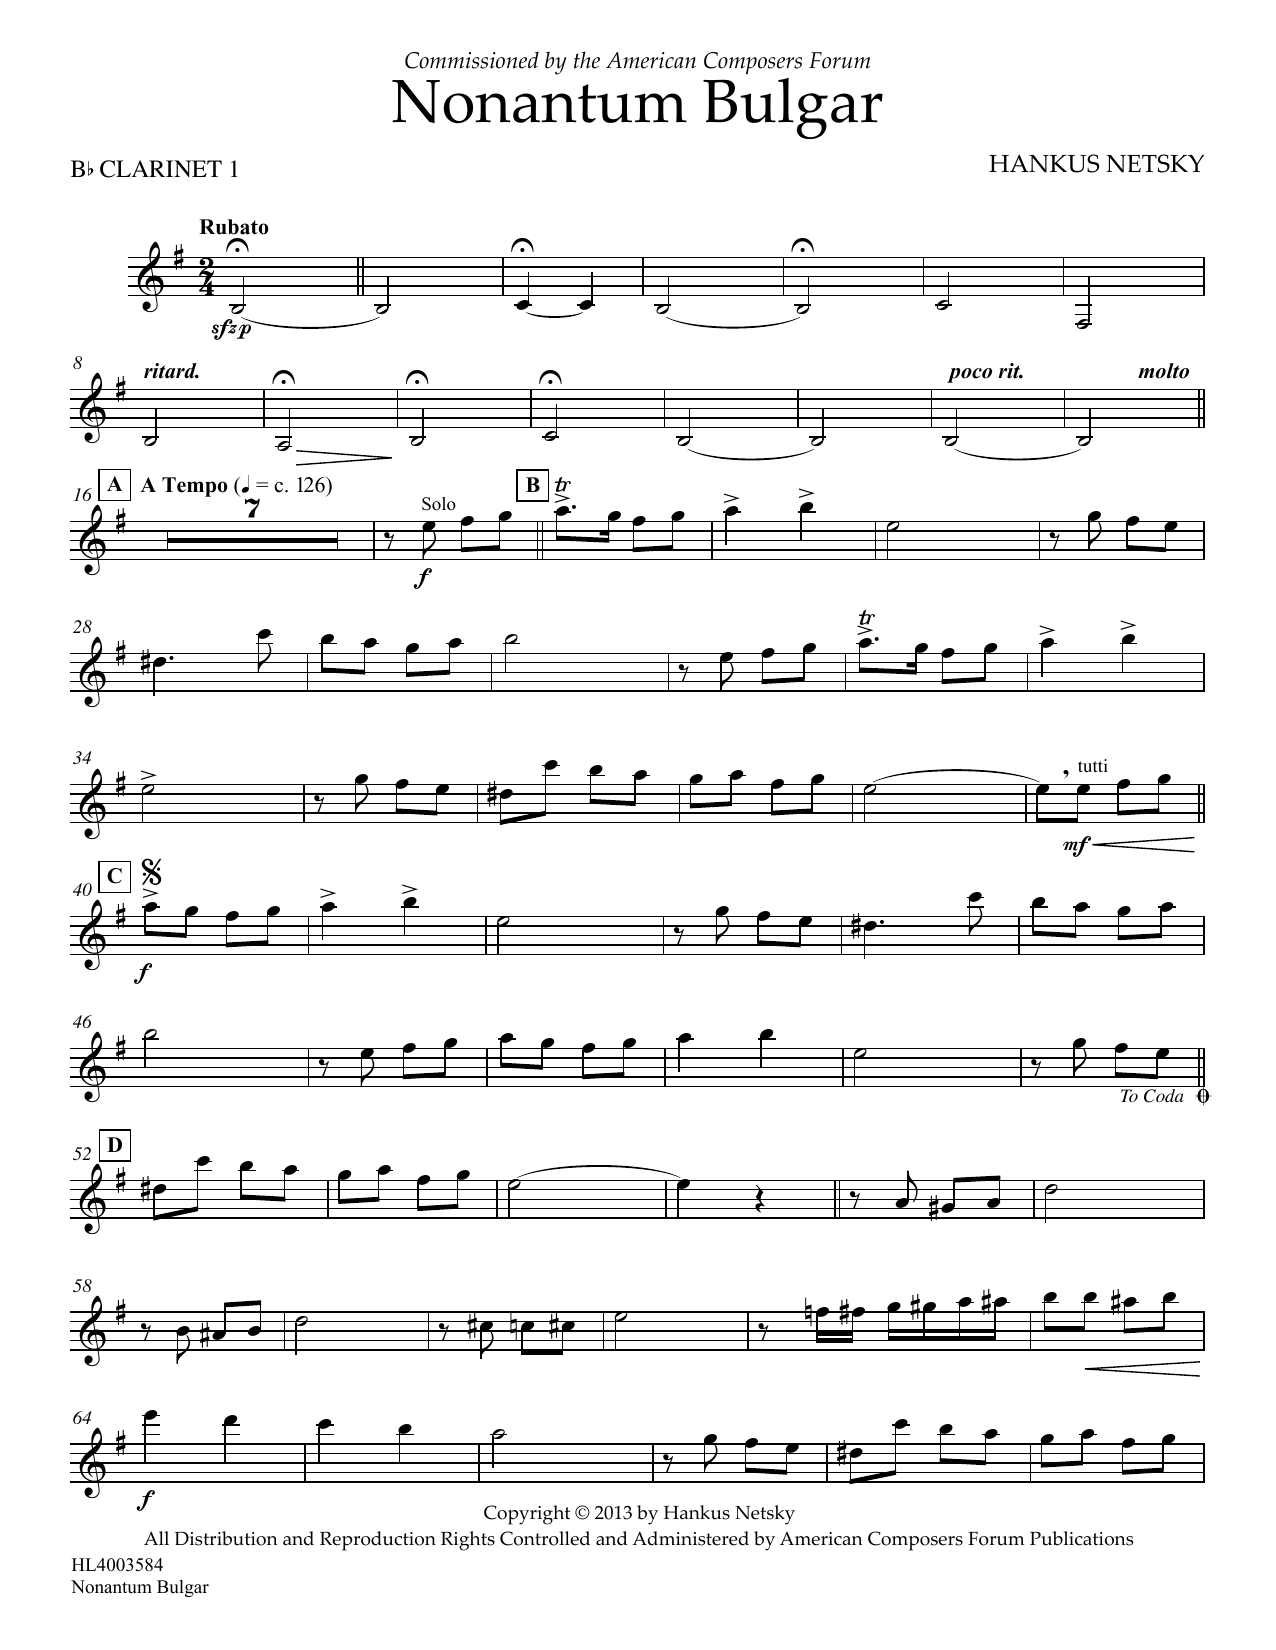 Hankus Netsky Nonantum Bulgar - Clarinet 1 Sheet Music Notes & Chords for Concert Band - Download or Print PDF